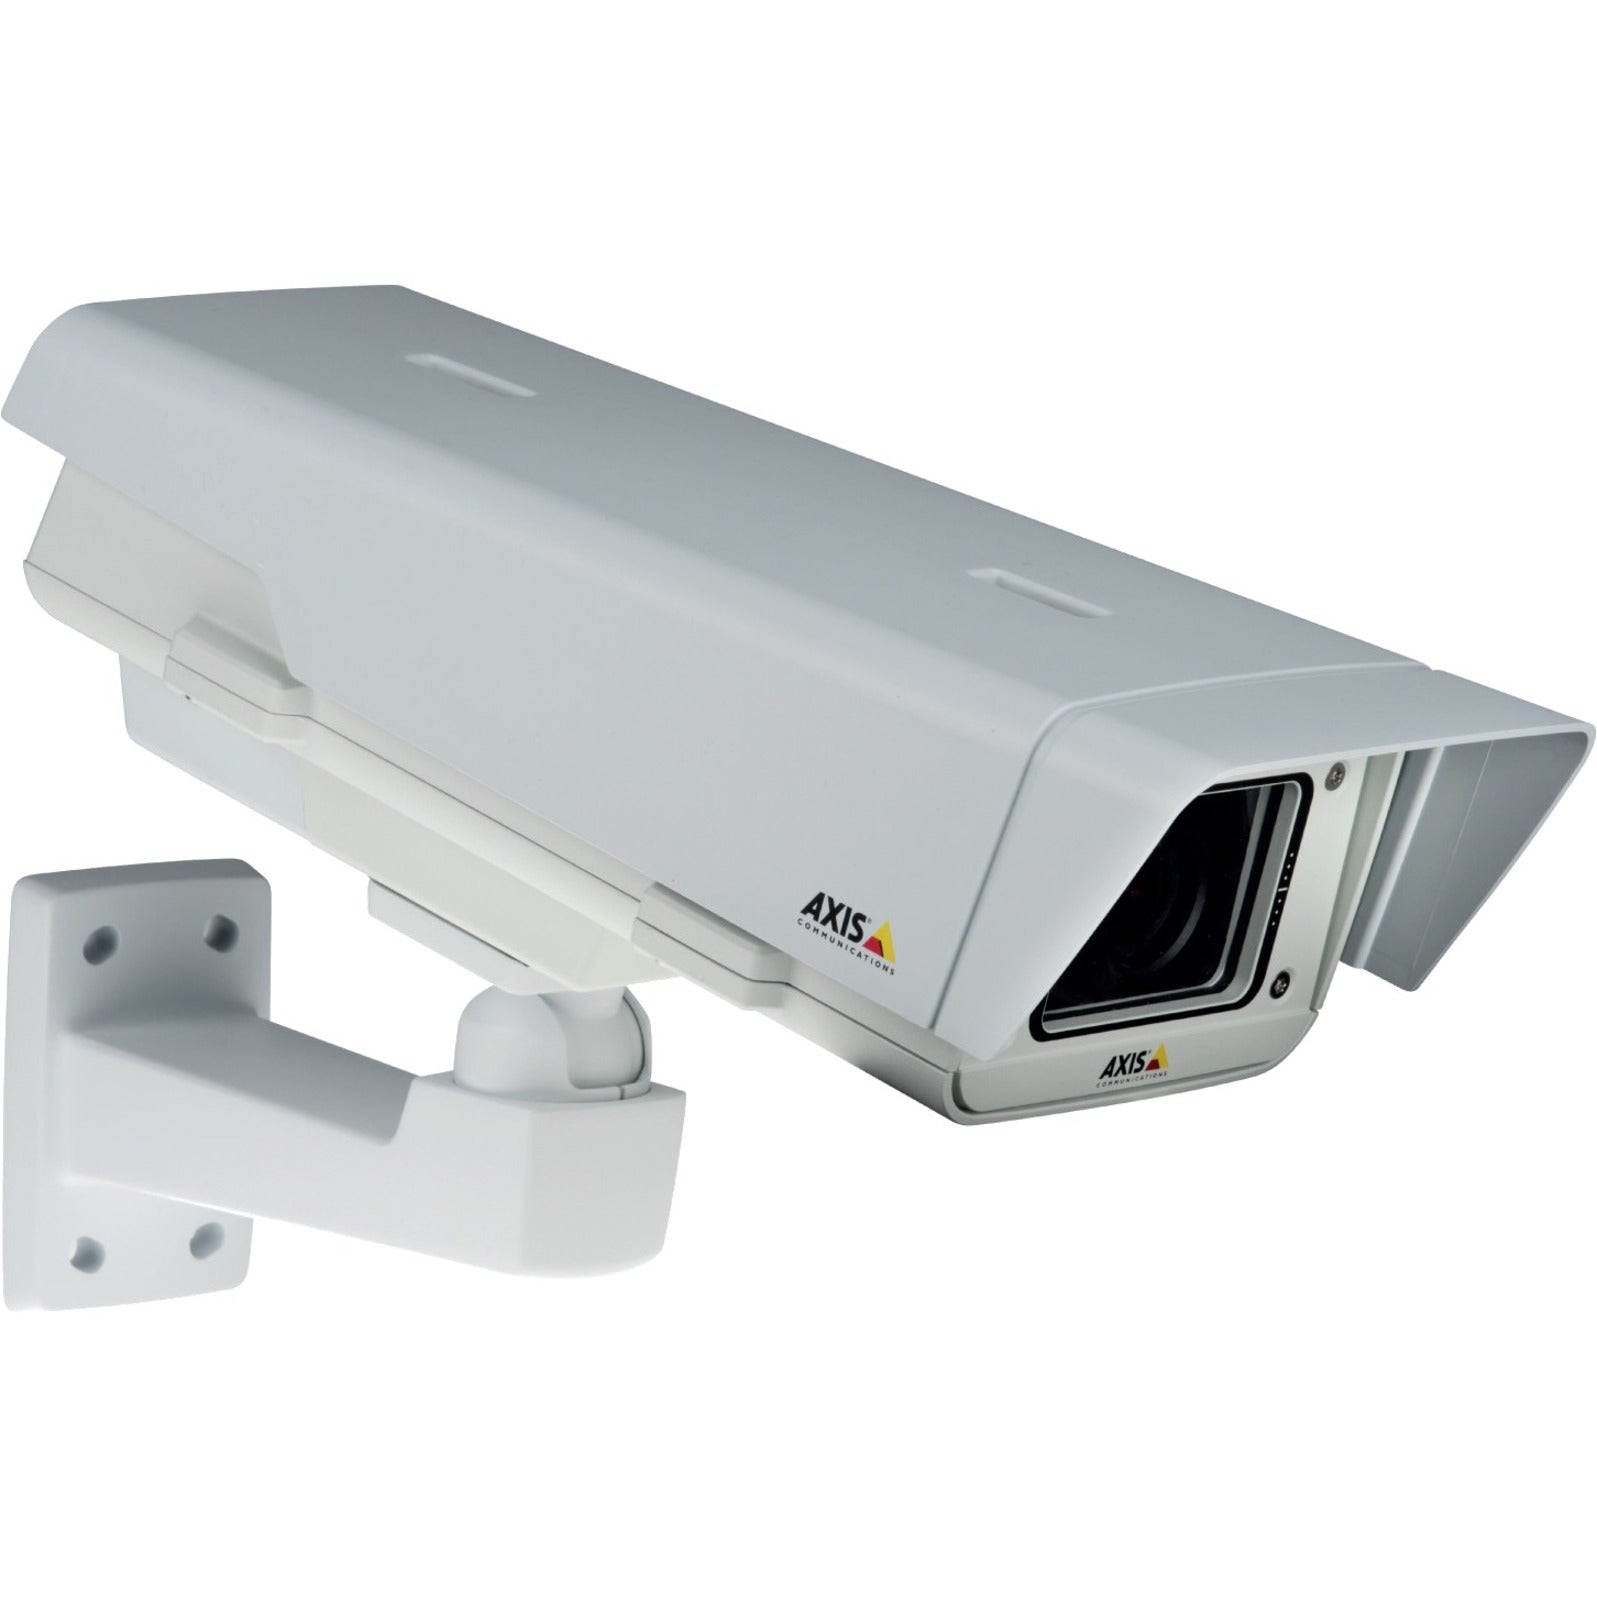 AXIS 01533-031 P1375-E Network Camera, 2 Megapixel Outdoor Full HD, Varifocal Lens, 3.5x Optical Zoom, CS-Mount, H.264, 60 fps, Memory Card Storage